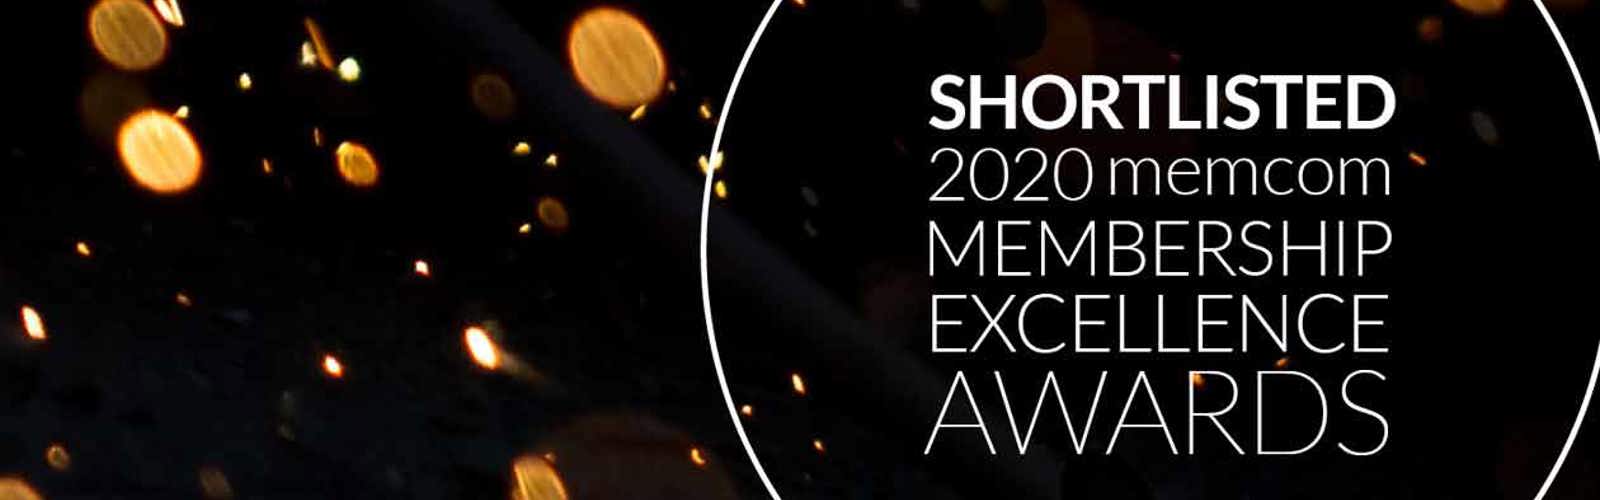 Shortlisted 2020 memcom membership excellence awards